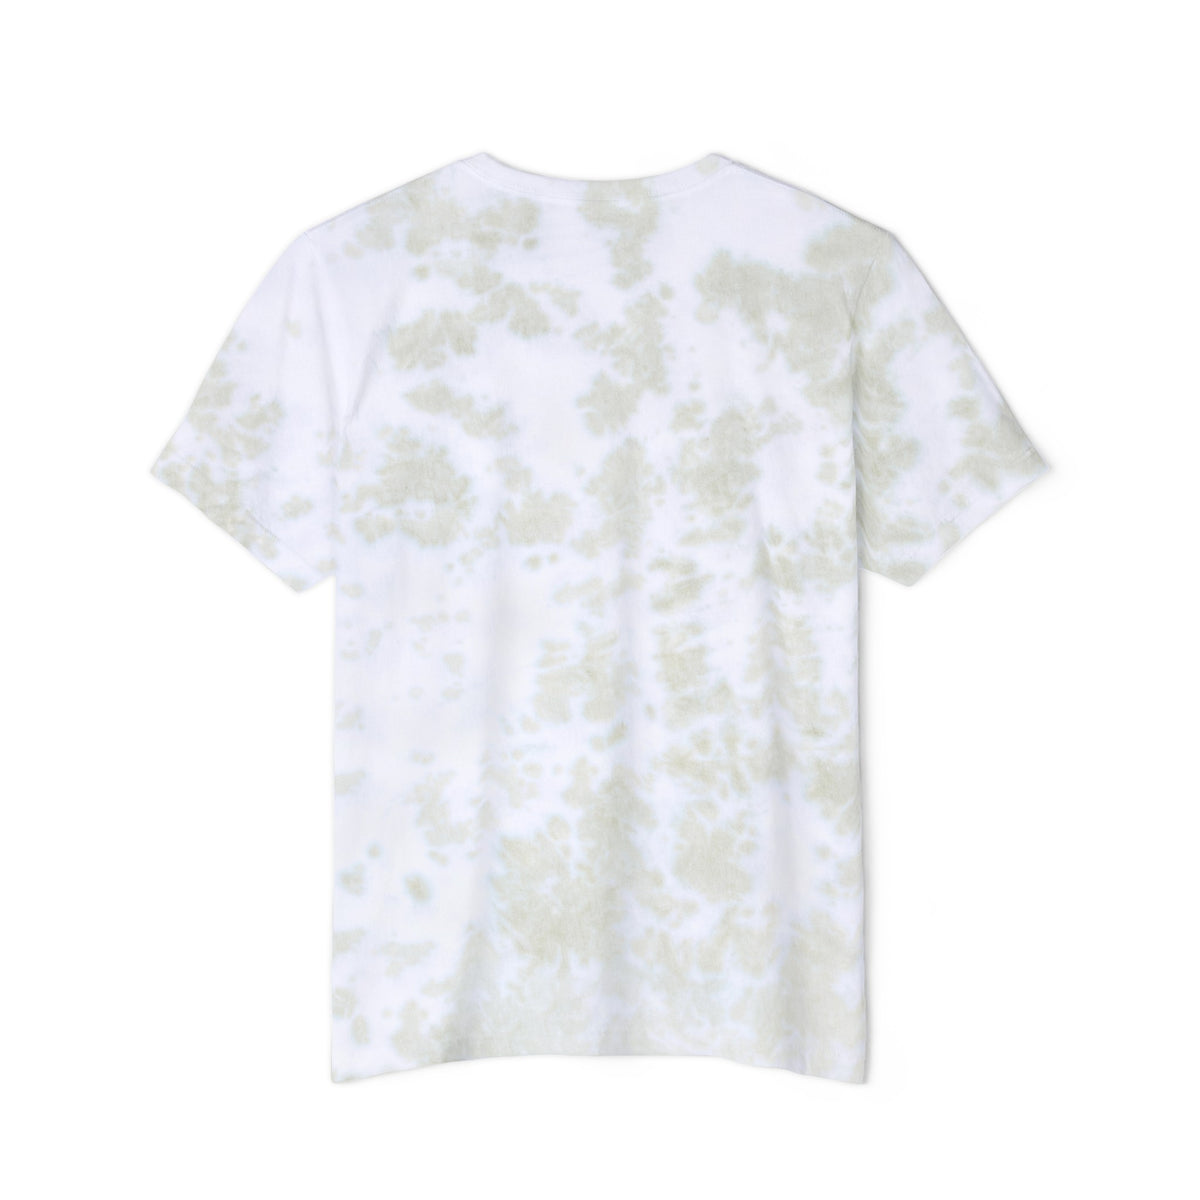 Herbology Bella Canvas Unisex FWD Fashion Tie-Dyed T-Shirt